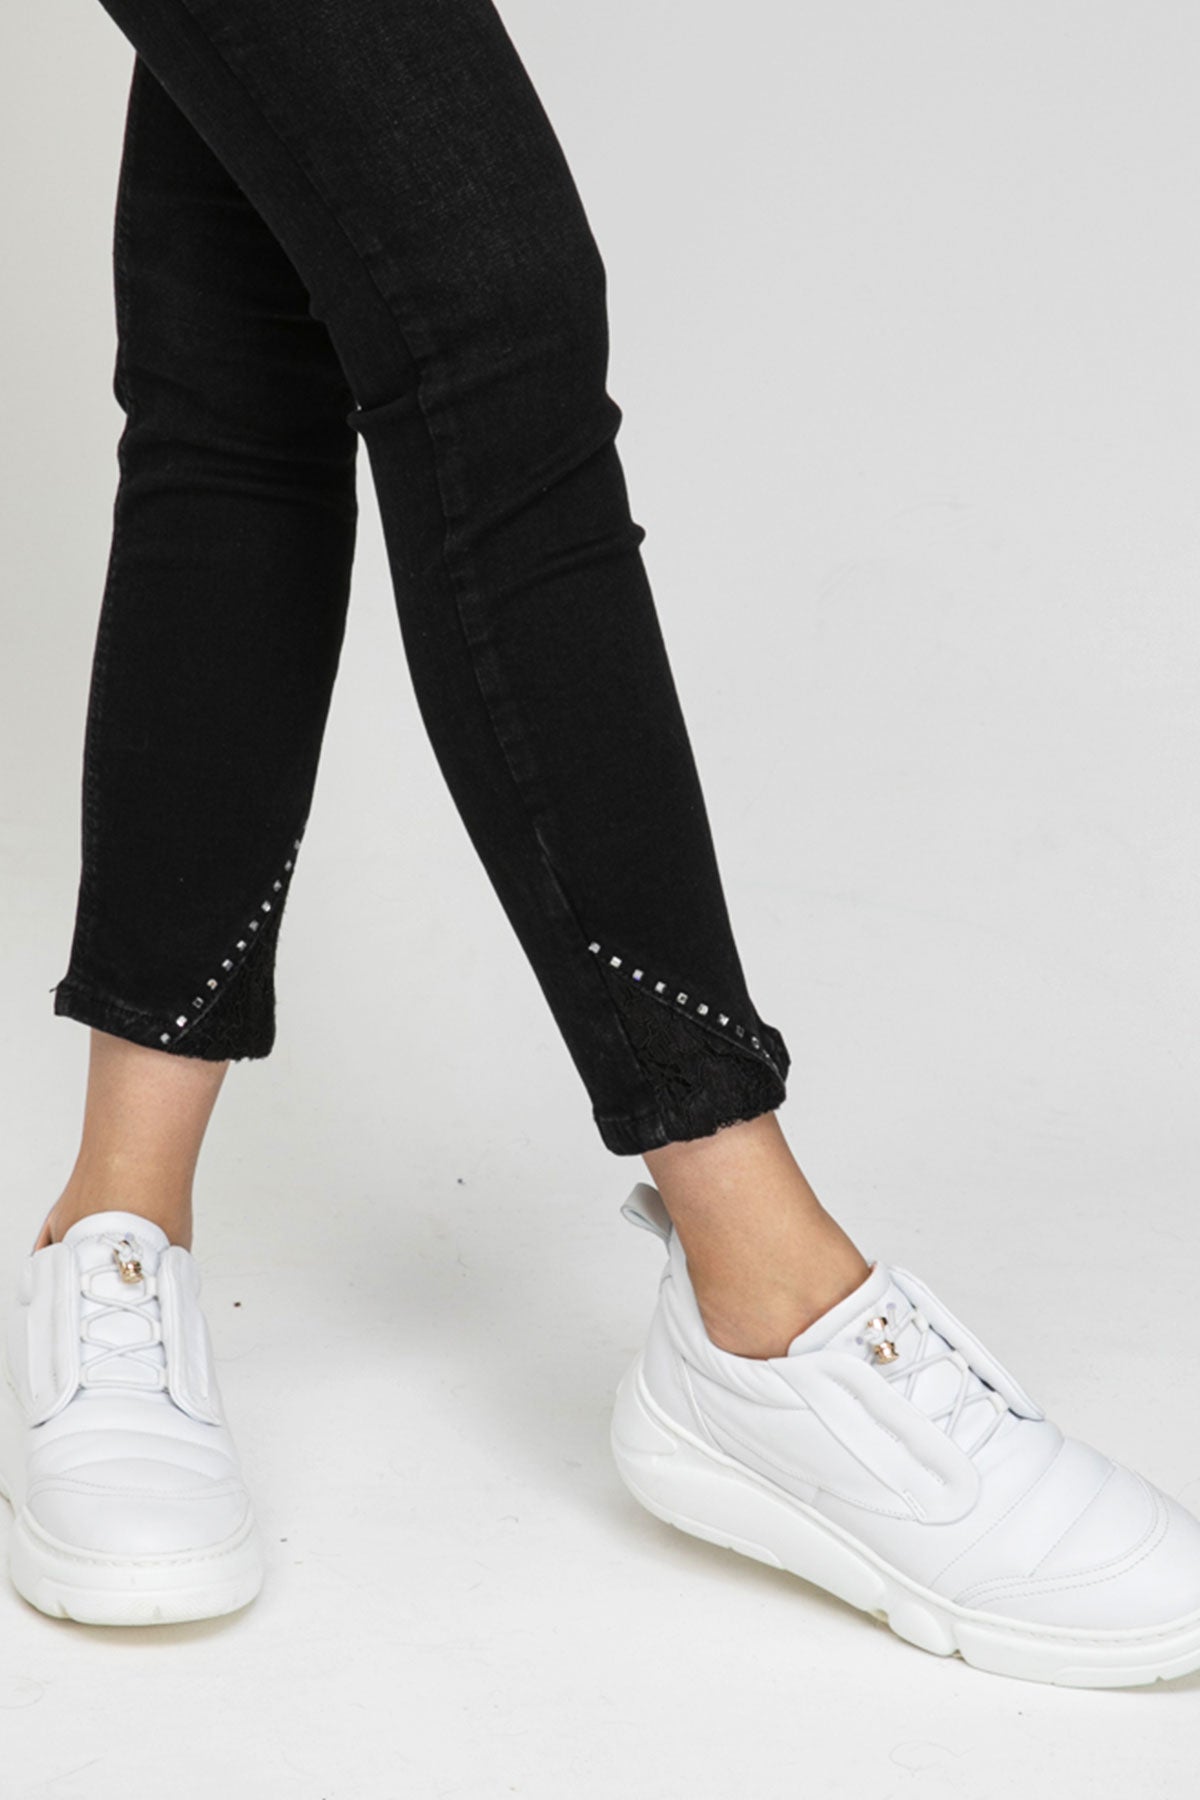 Liu Jo Bottom Up Jeans-Libas Trendy Fashion Store